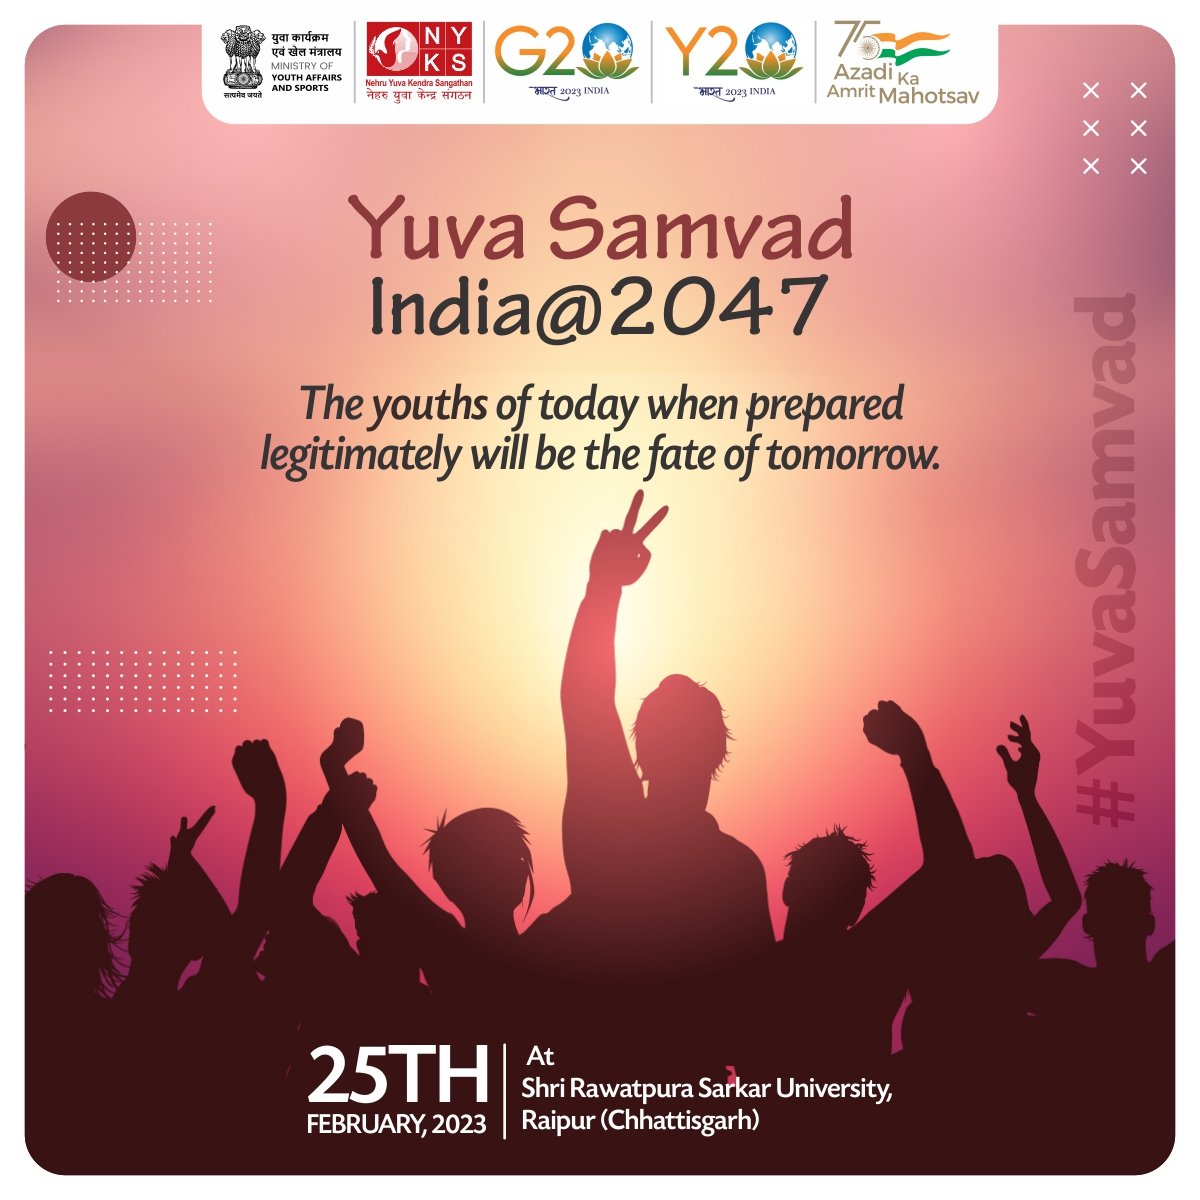 The youth of today when prepared legitimately will be the fate of tomorrow.

#YuvaSamvad #YuvaShakti #Indiaat2047 #India #Youth #YuvaSamvadRaipur